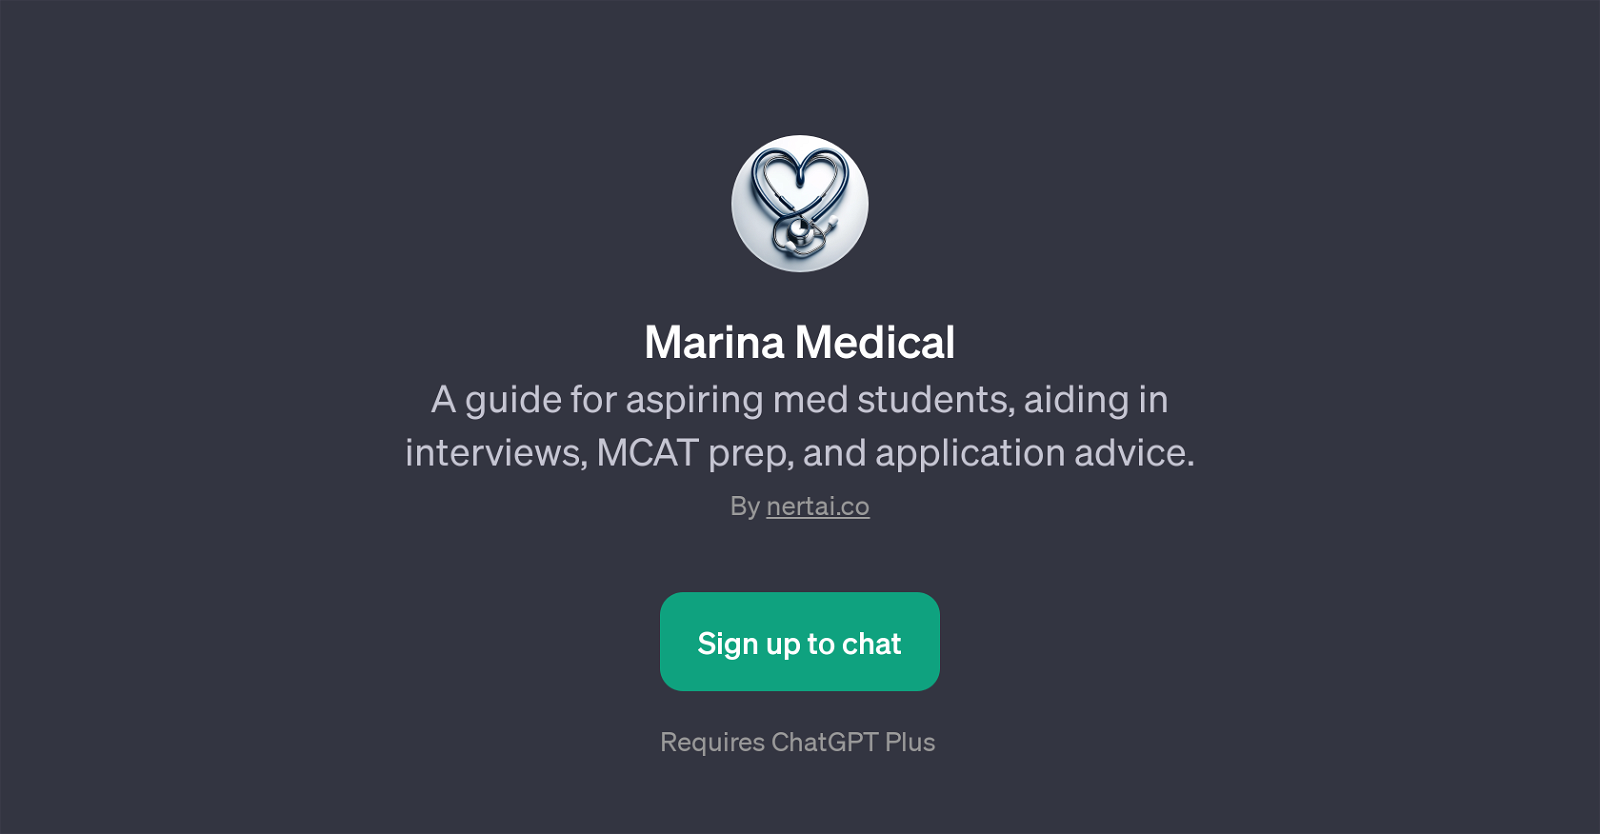 Marina Medical website